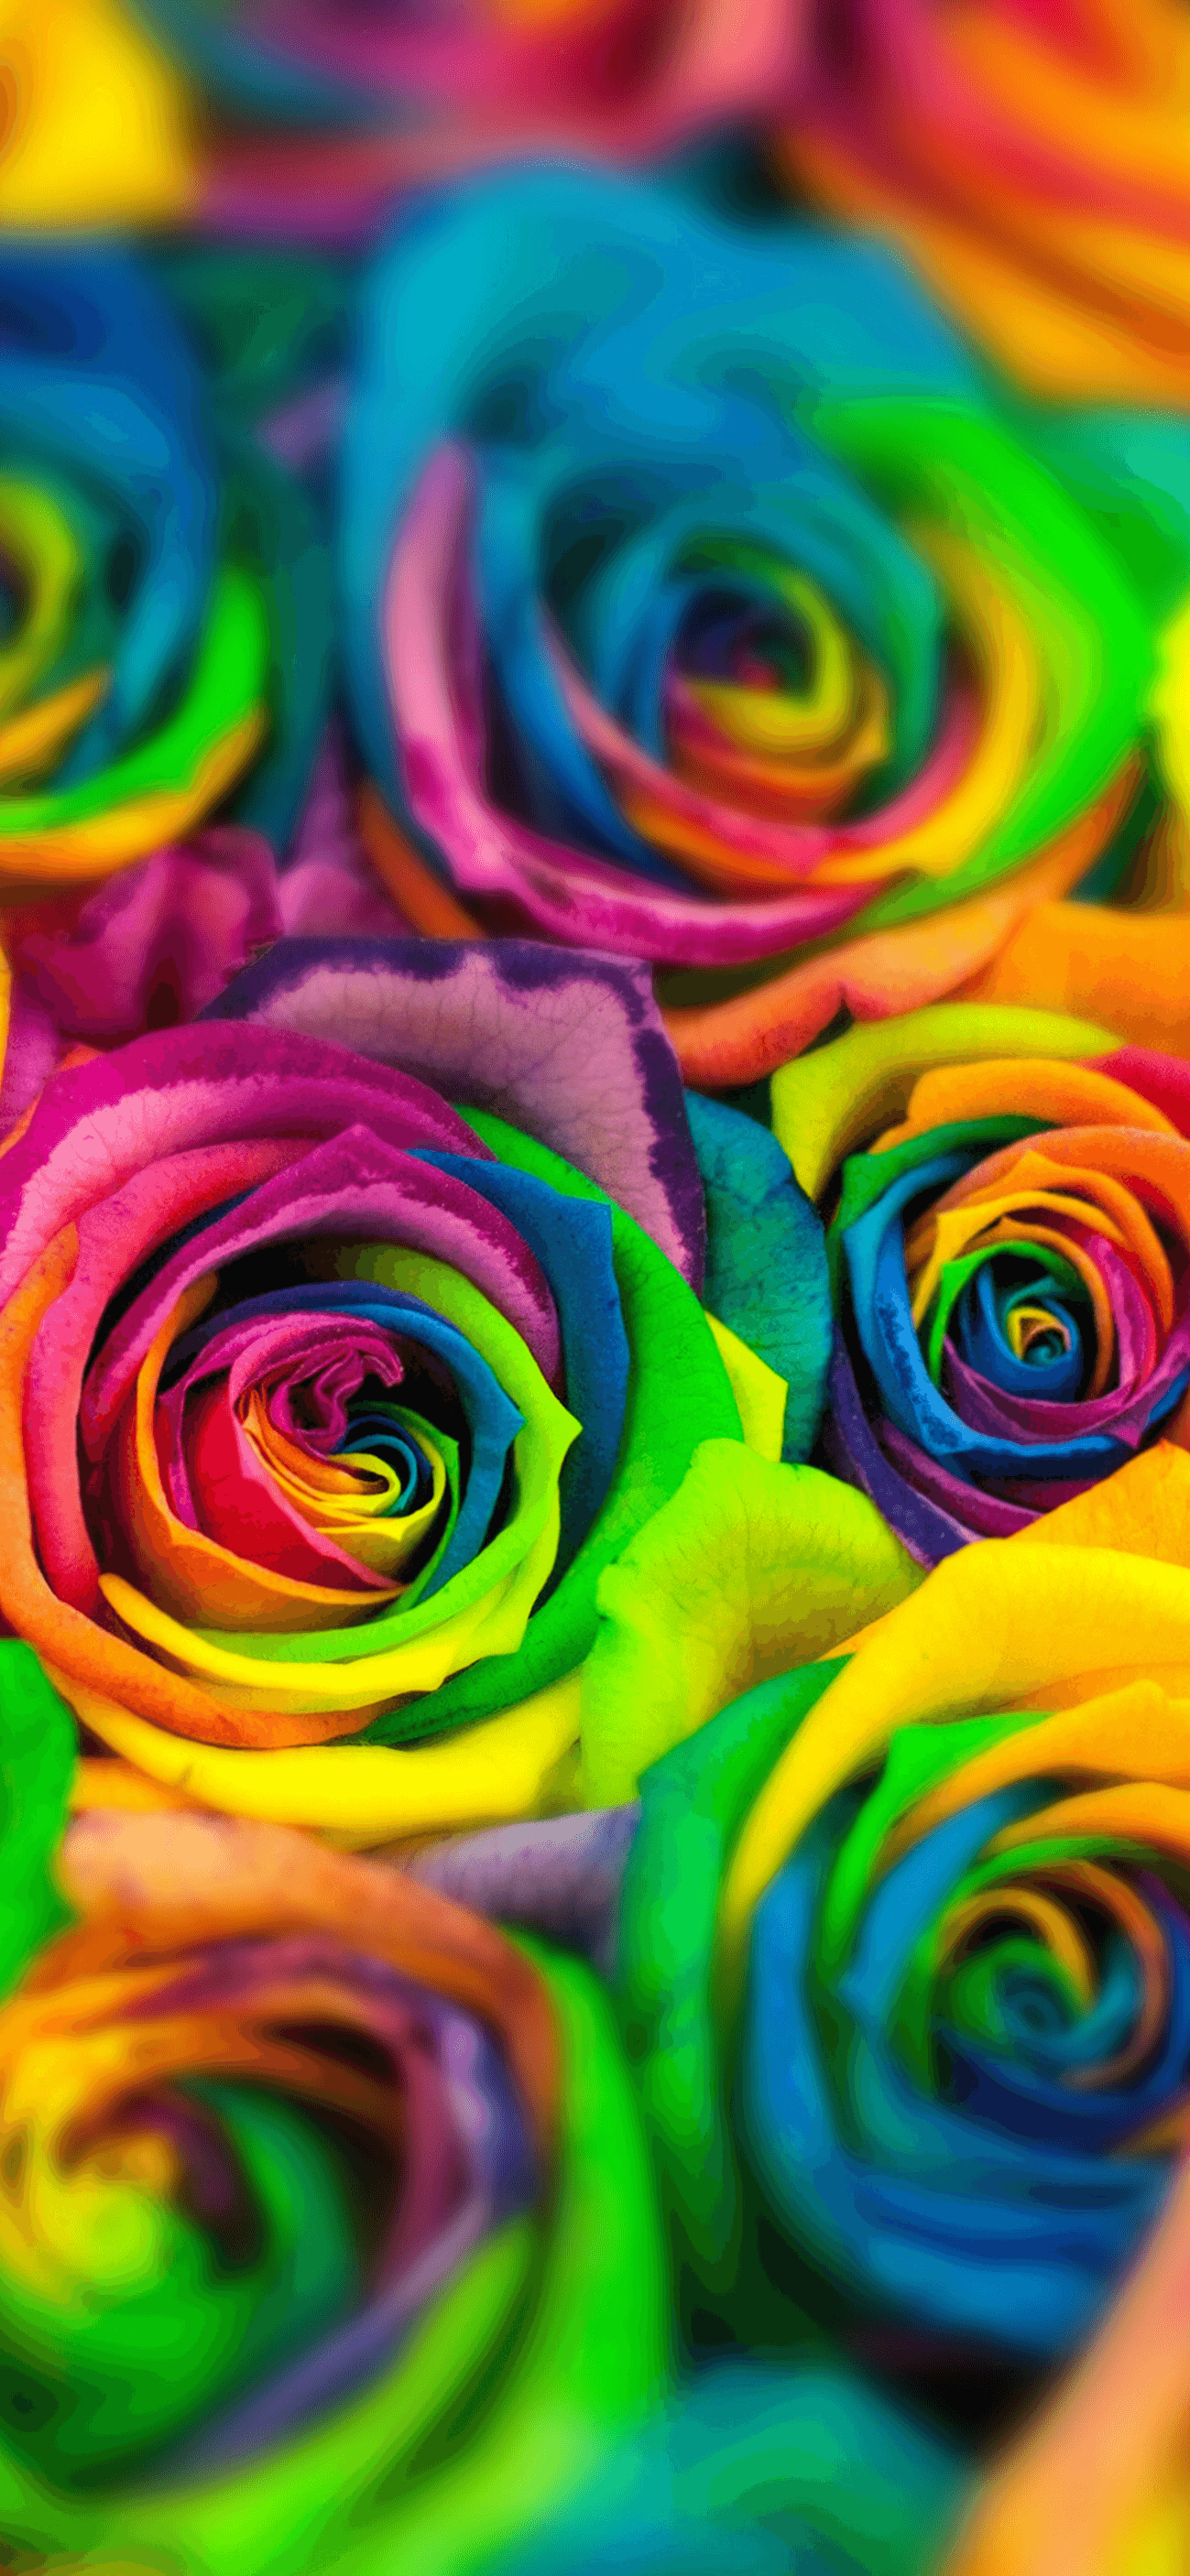 Rainbow Roses Wallpaper Free Rainbow Roses